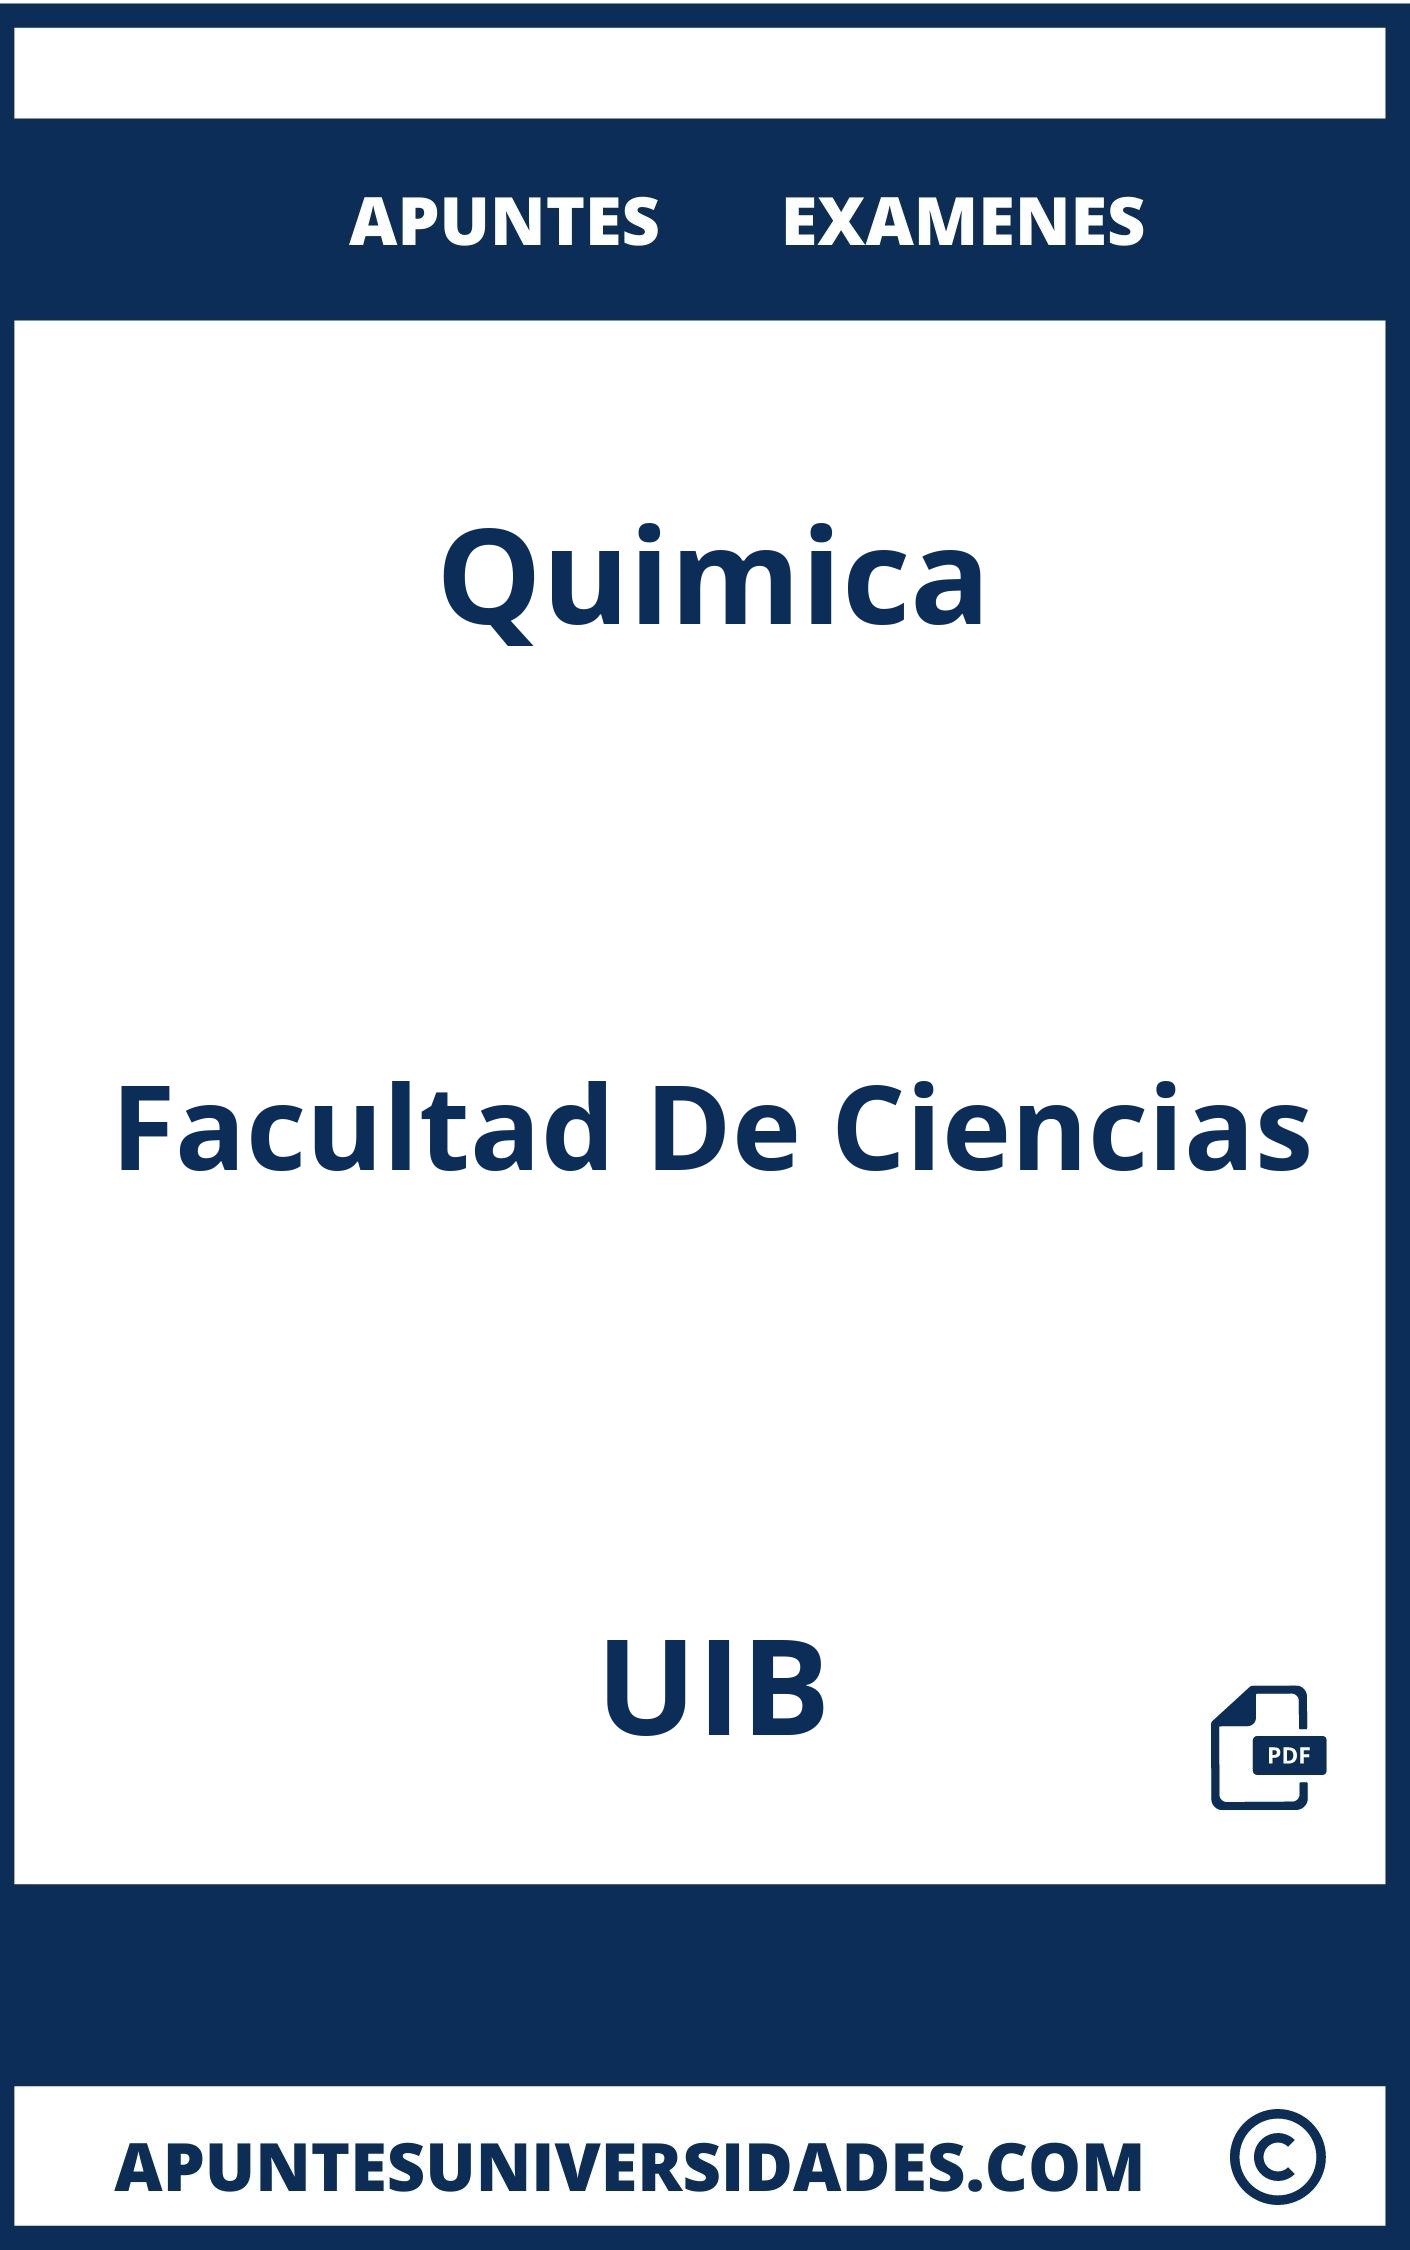 Quimica UIB Examenes Apuntes